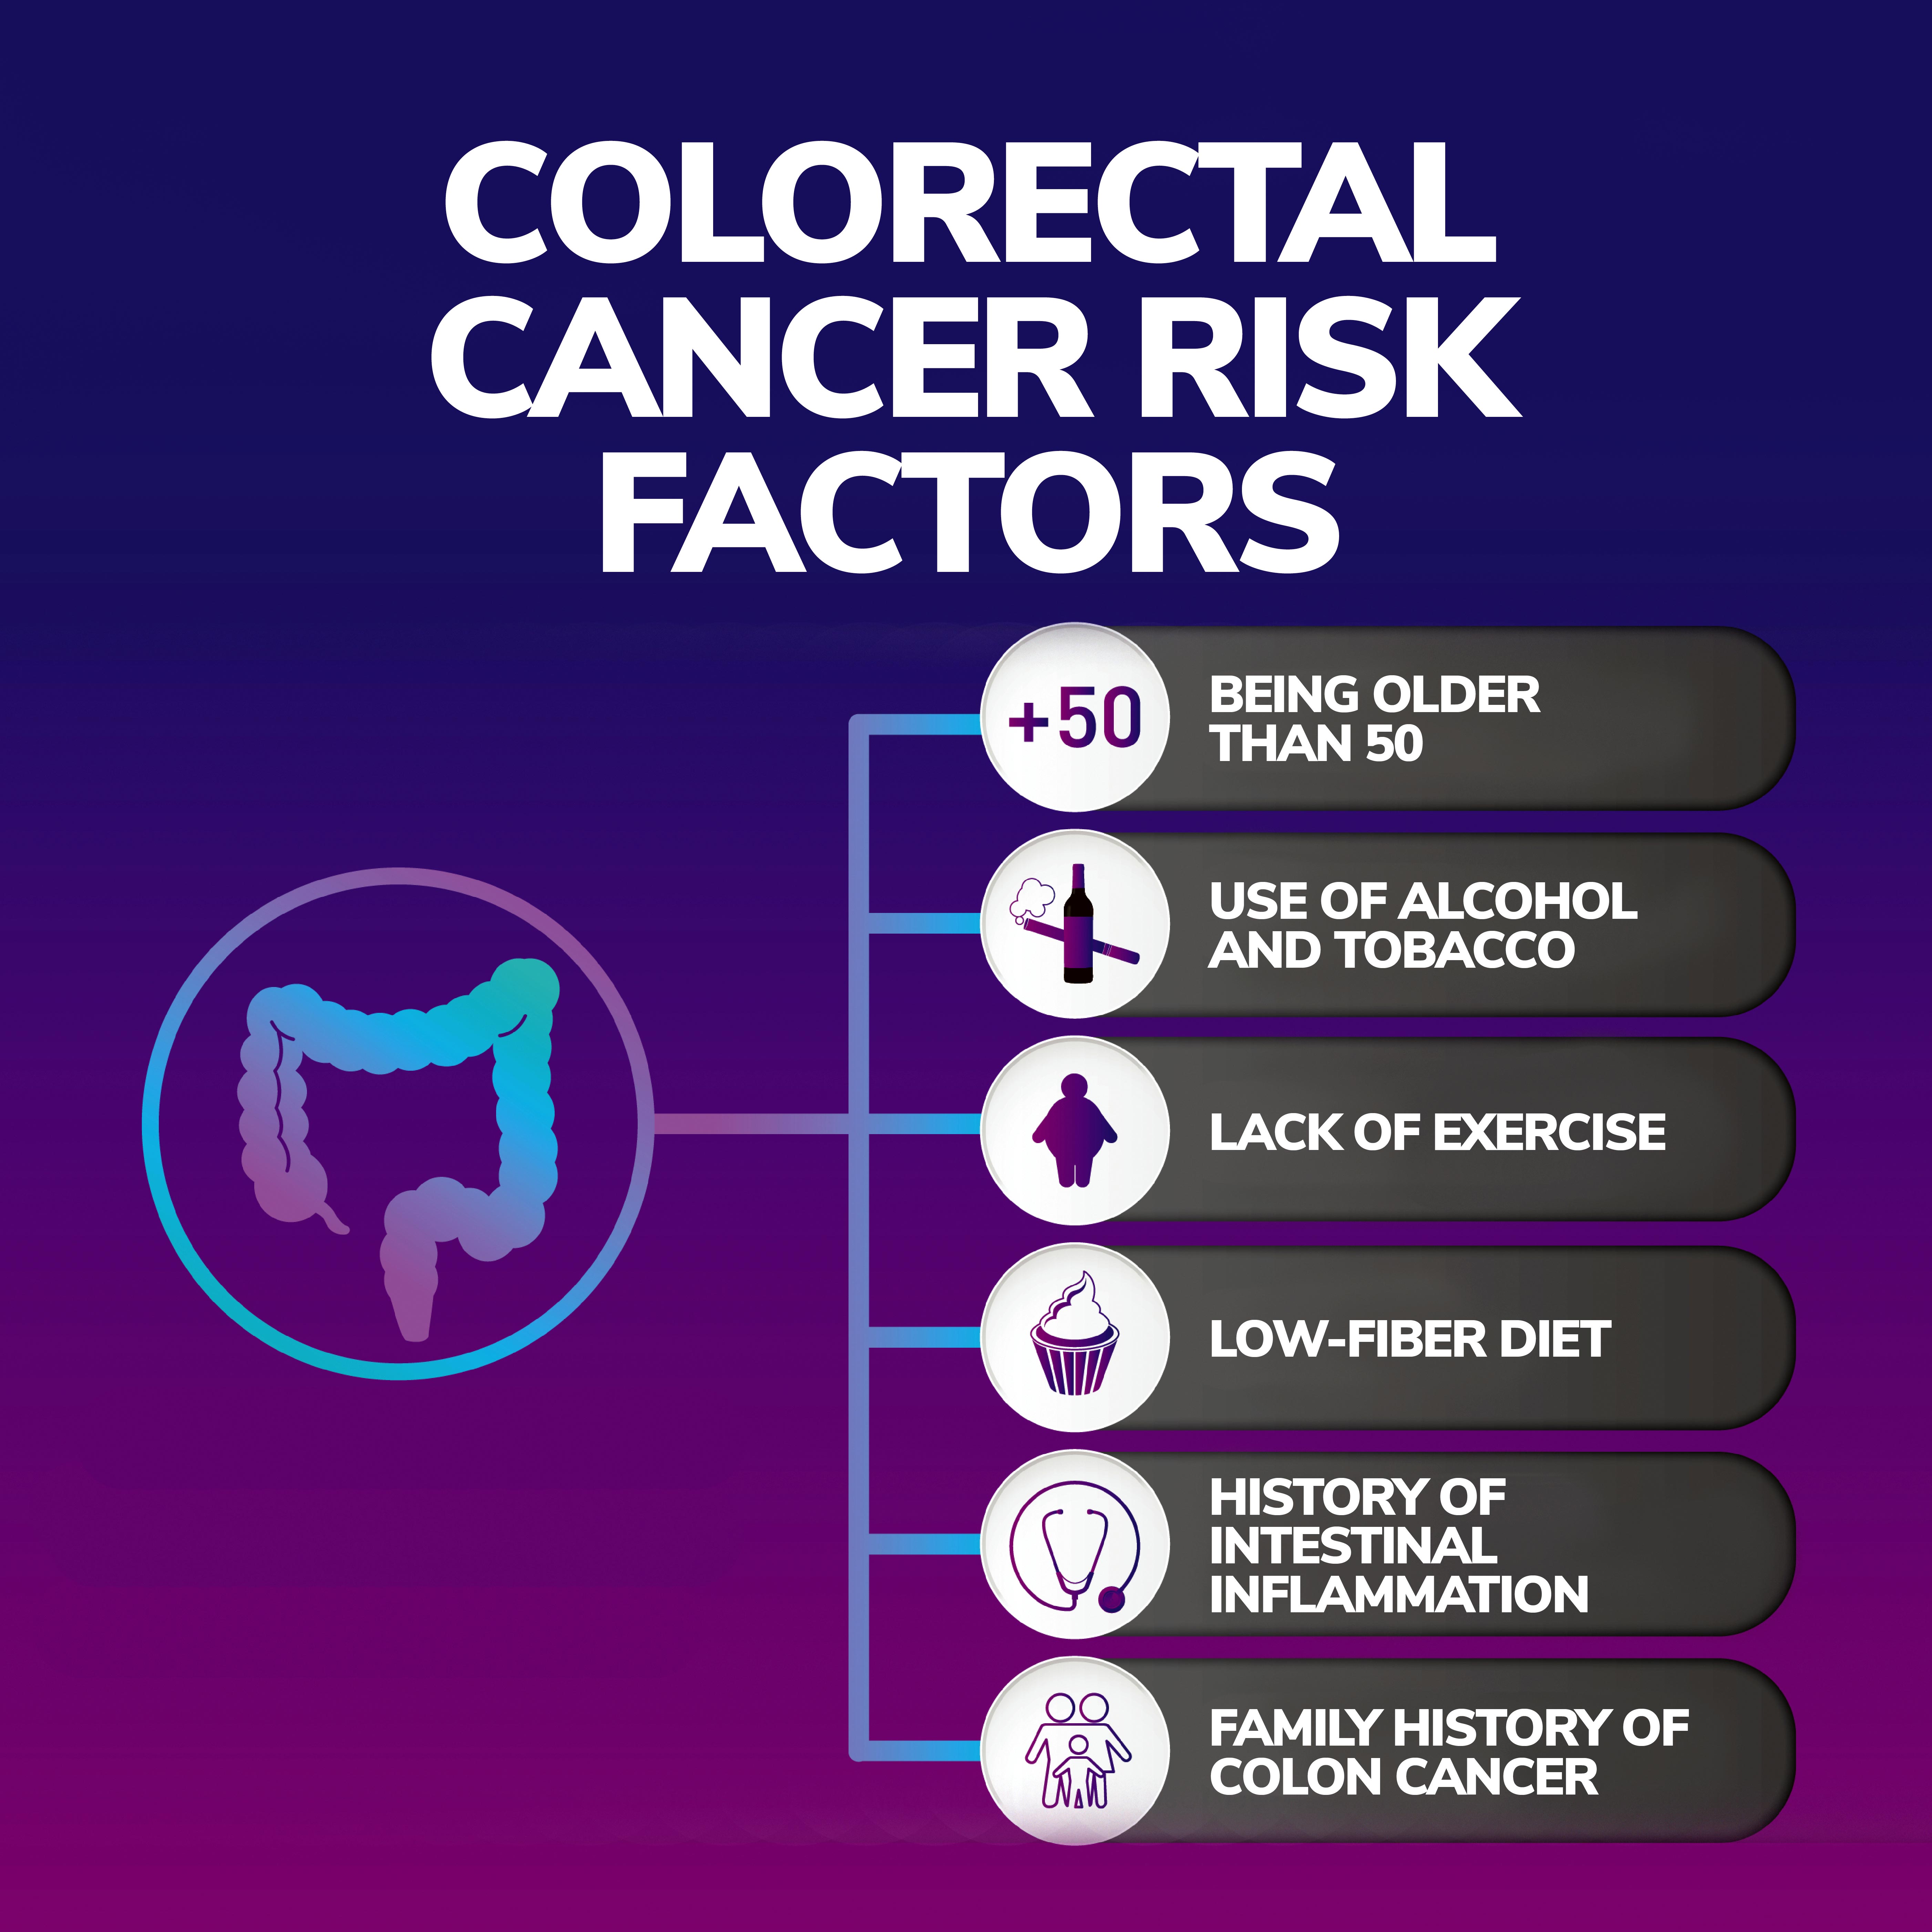 Colorectal Cancer Risk Factors